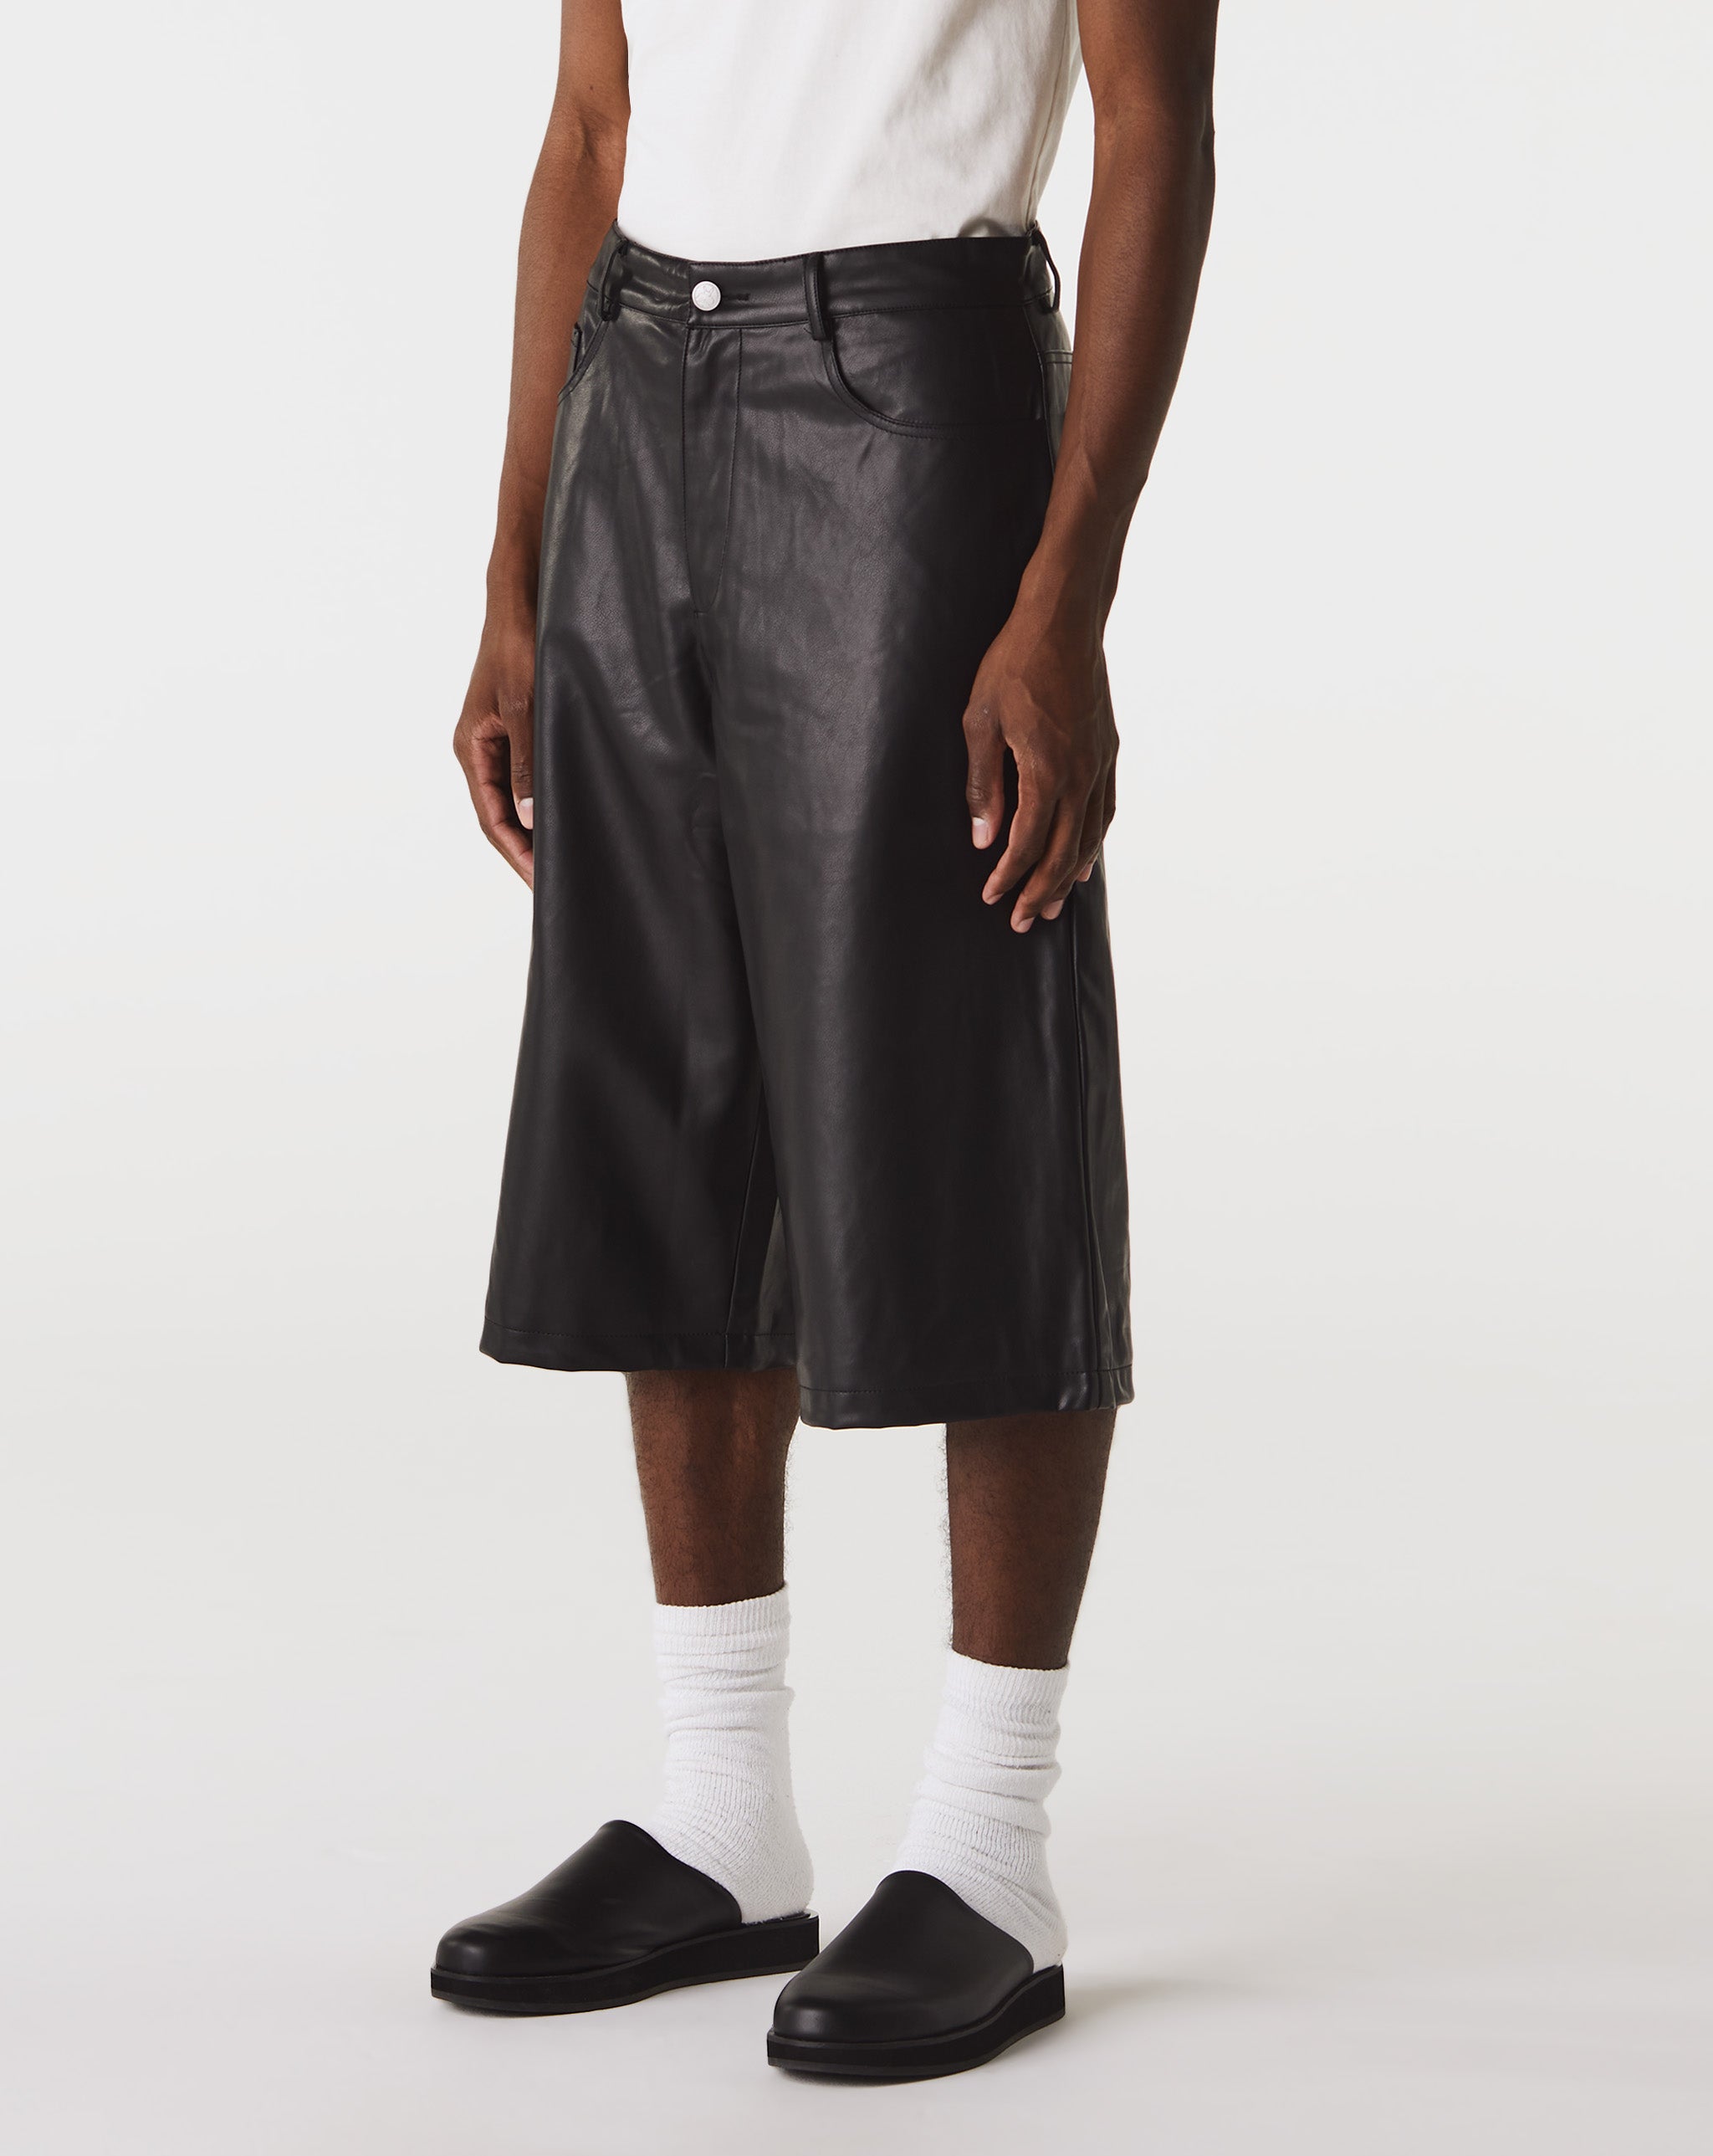 Basketcase Gallery Breacher Leather Shorts  - Cheap Cerbe Jordan outlet